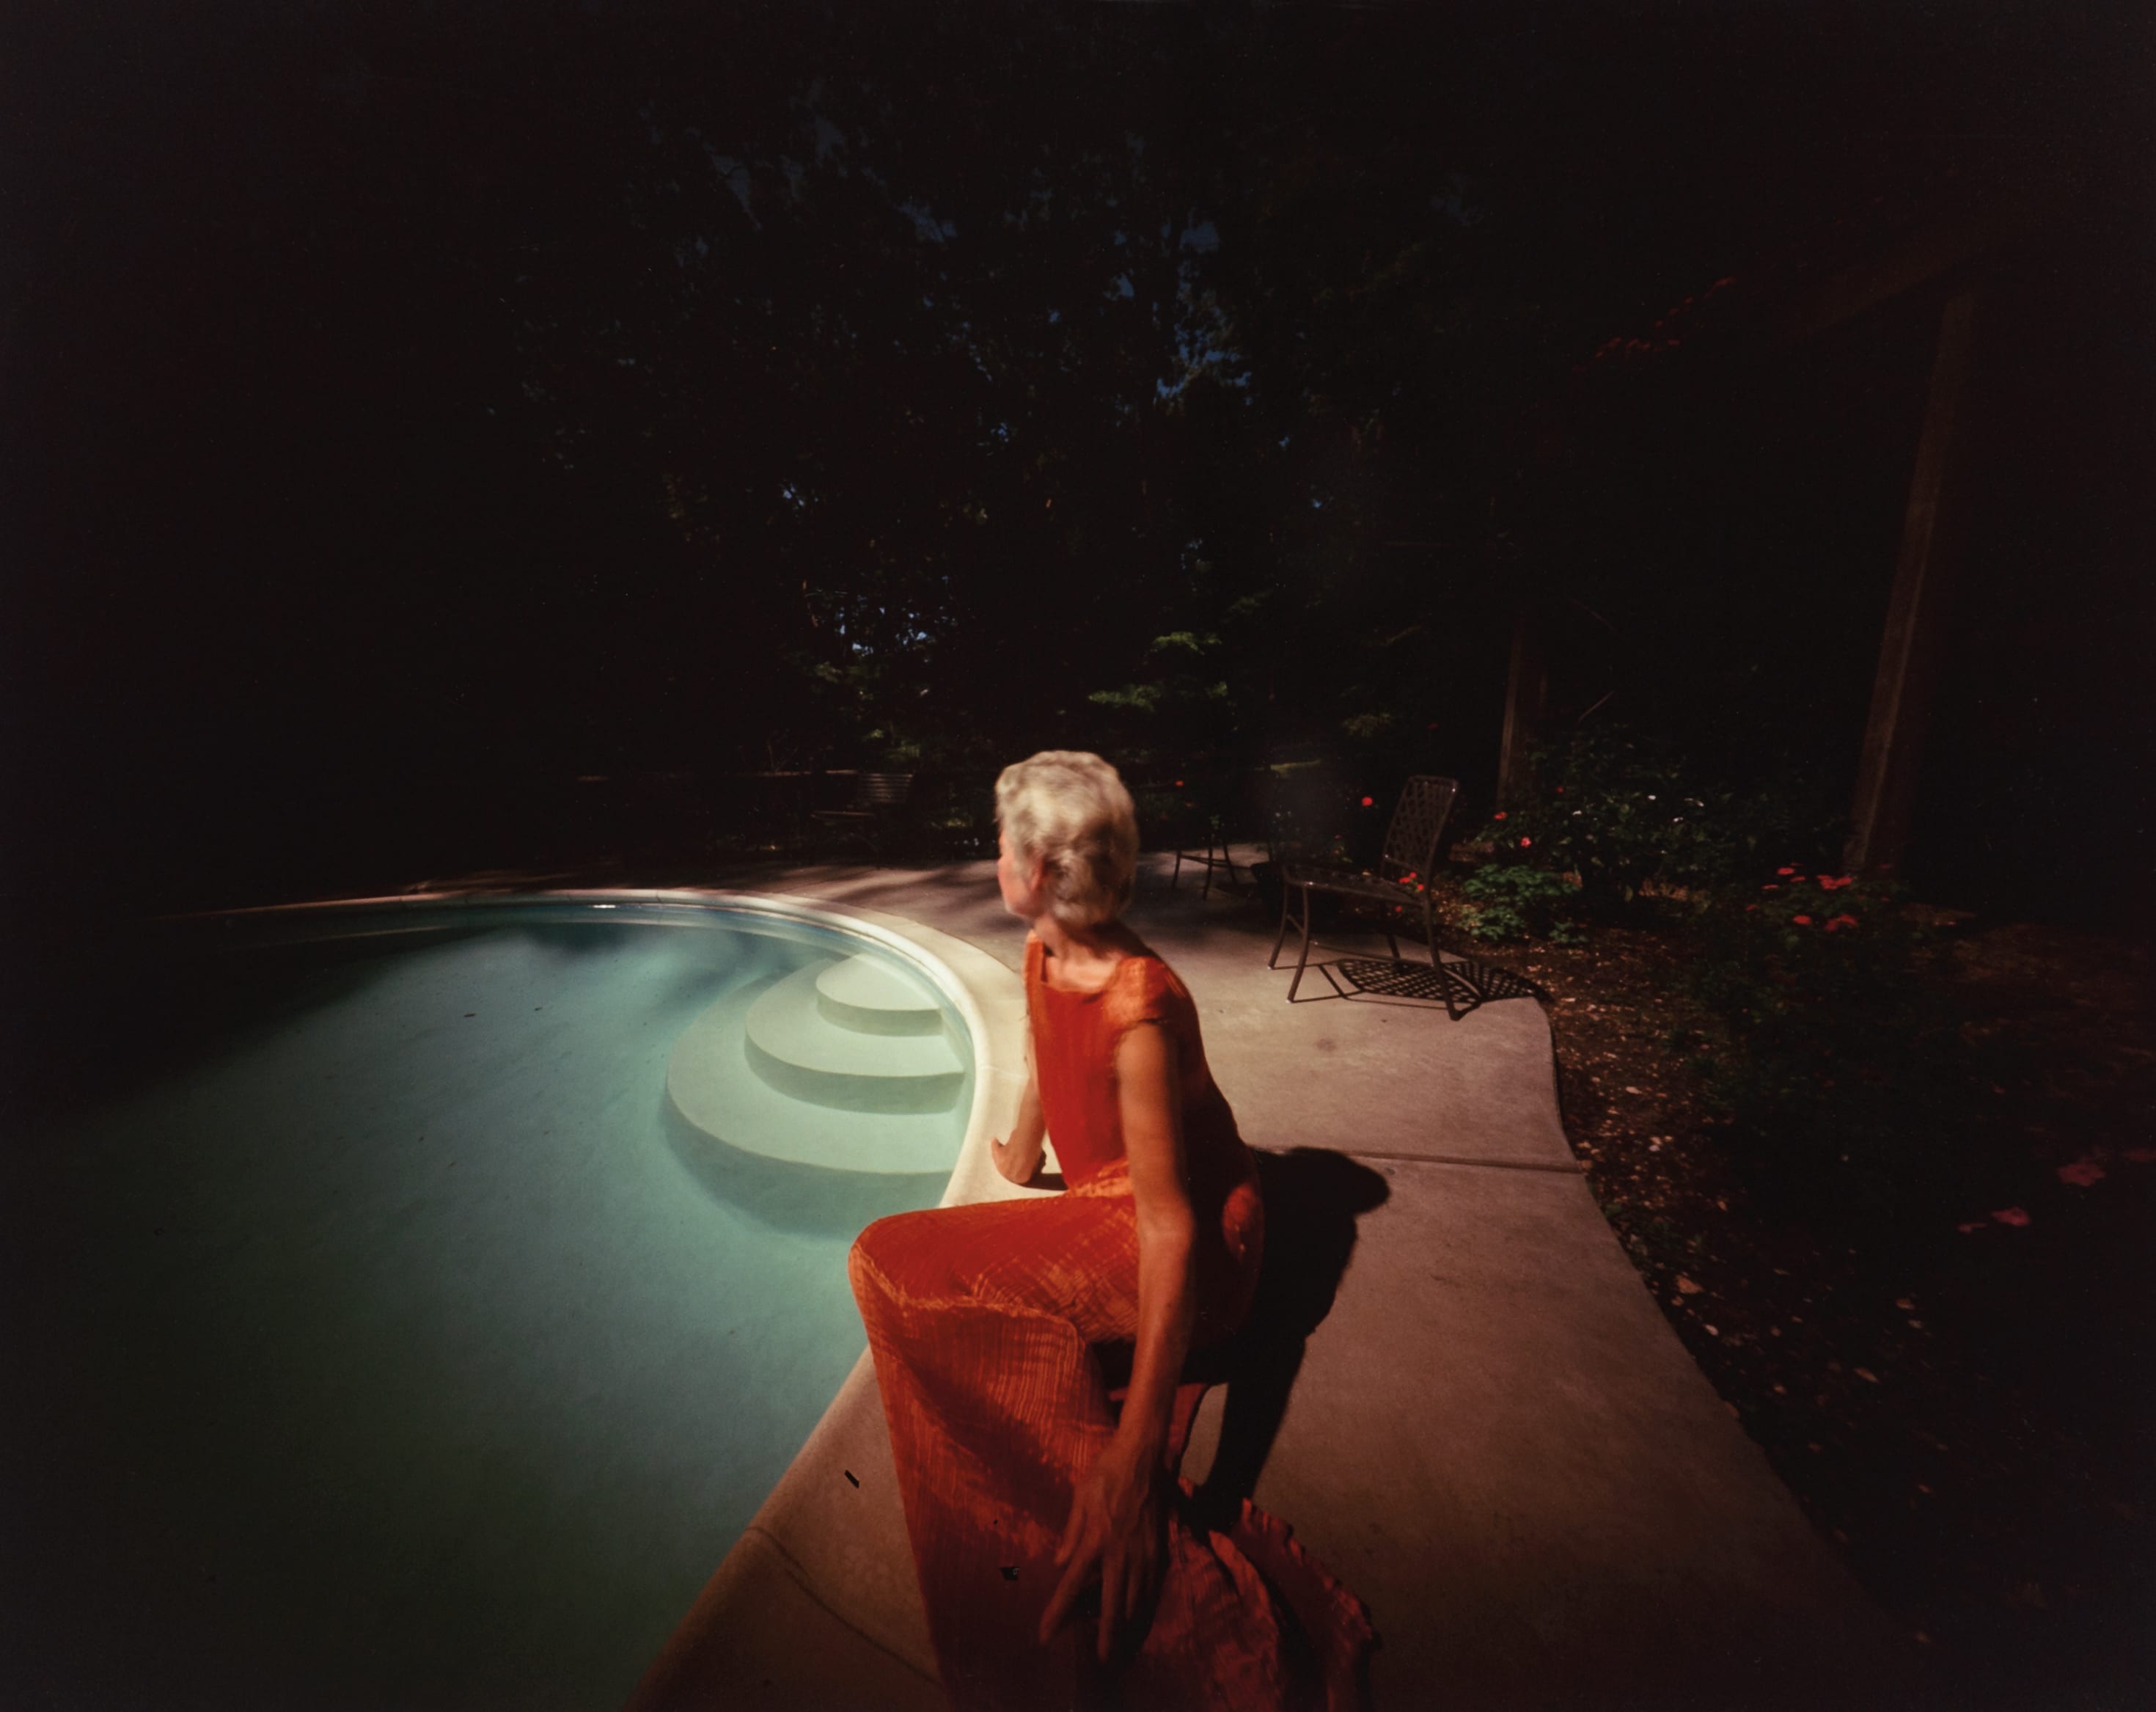 Richmond, Virginia: Joan by Her Pool, 1986